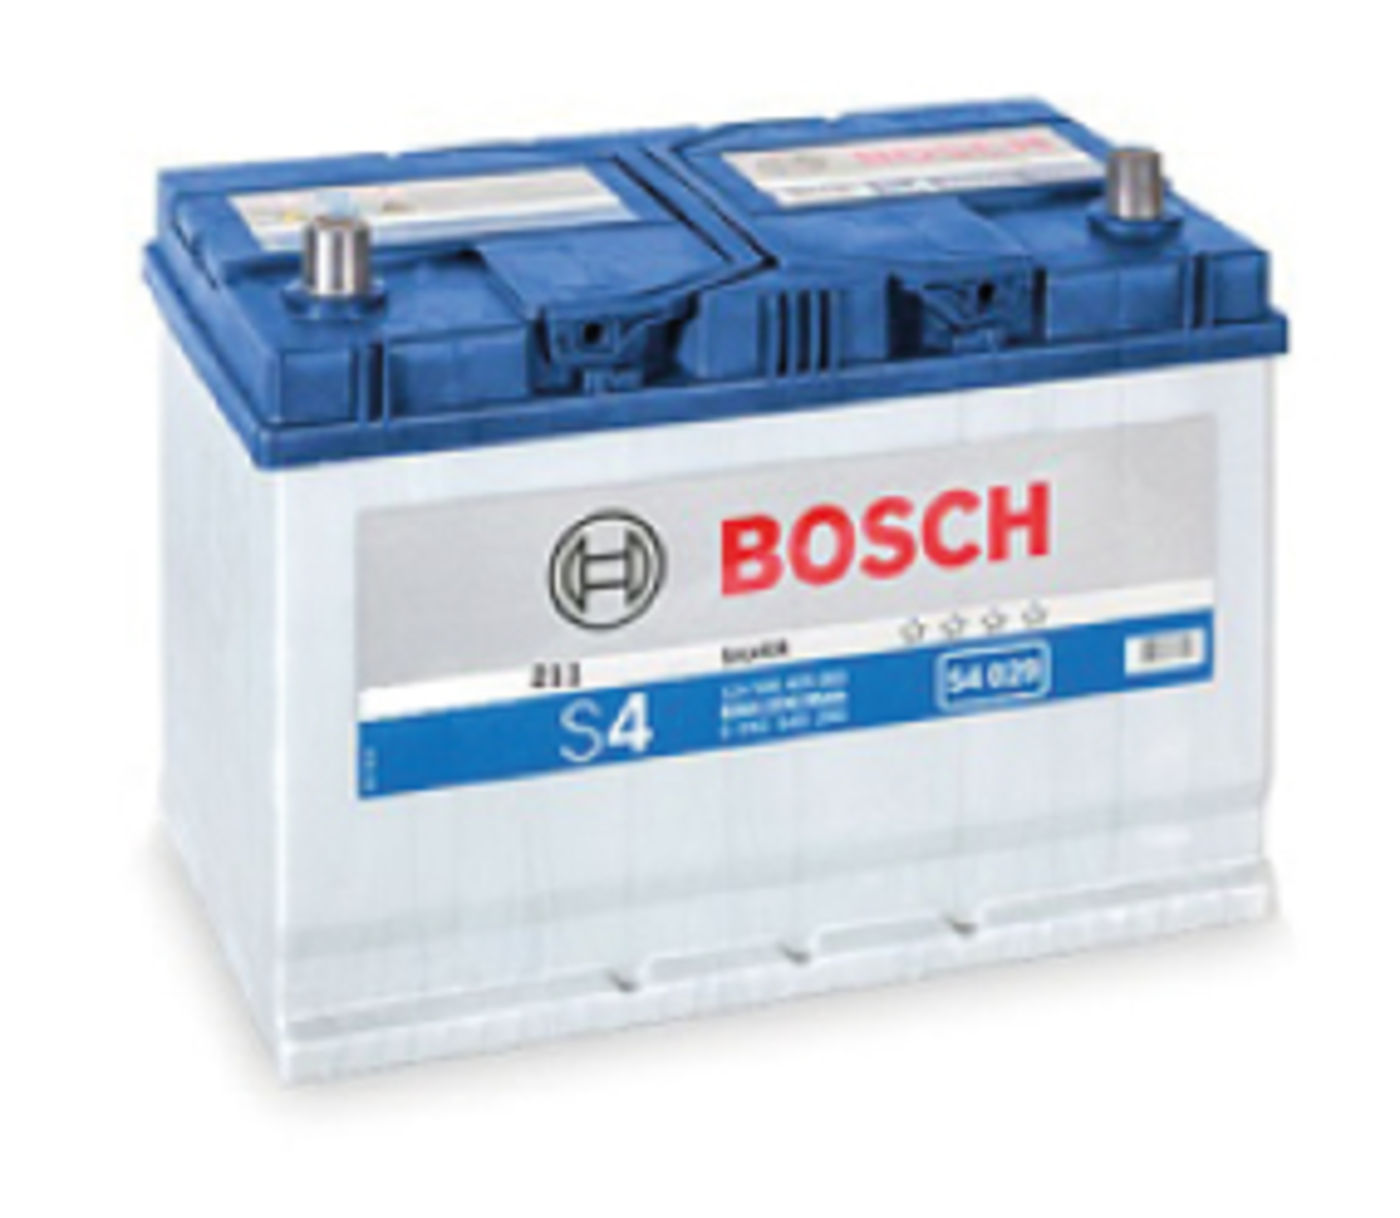 Bosch 31H HD